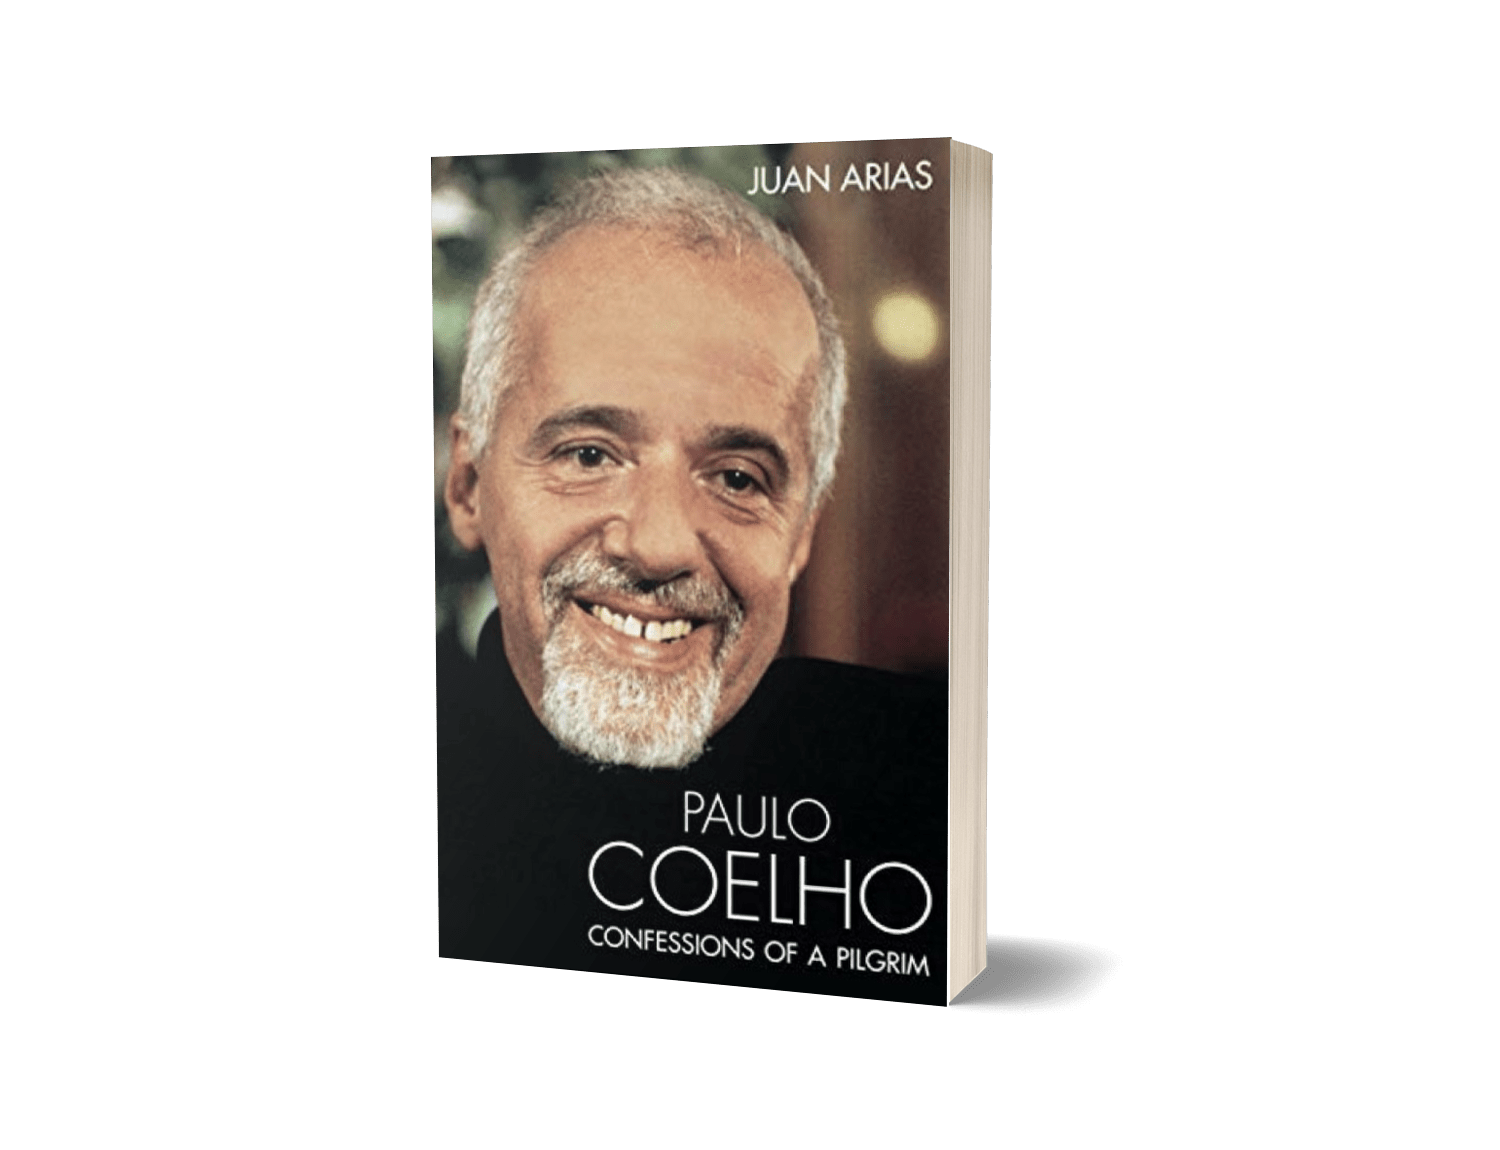 Confessions of a Pilgrim by Paulo Coelho